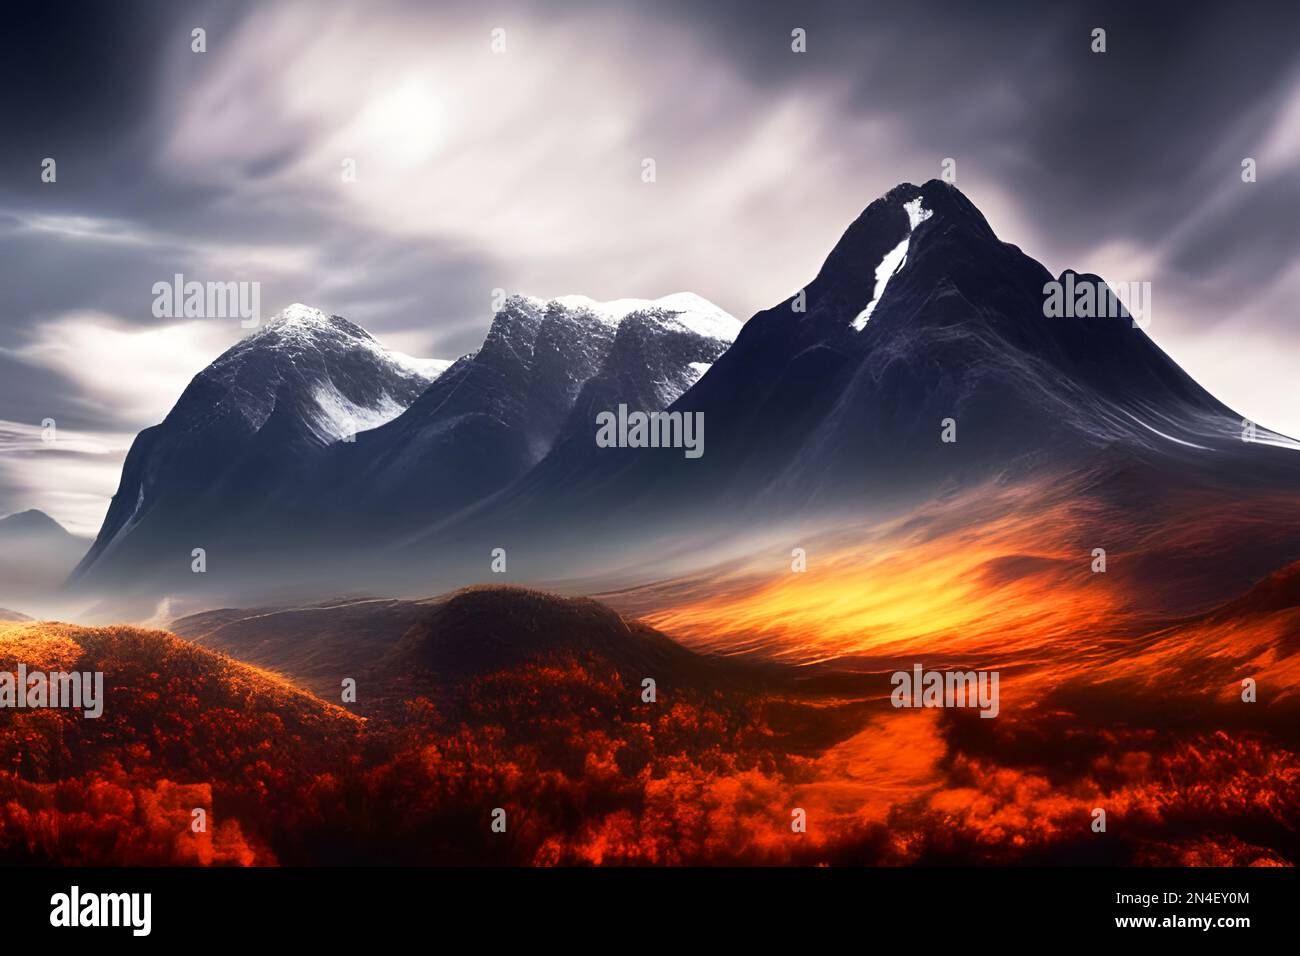 The days last light on a mountain range field depiction. Stock Photo